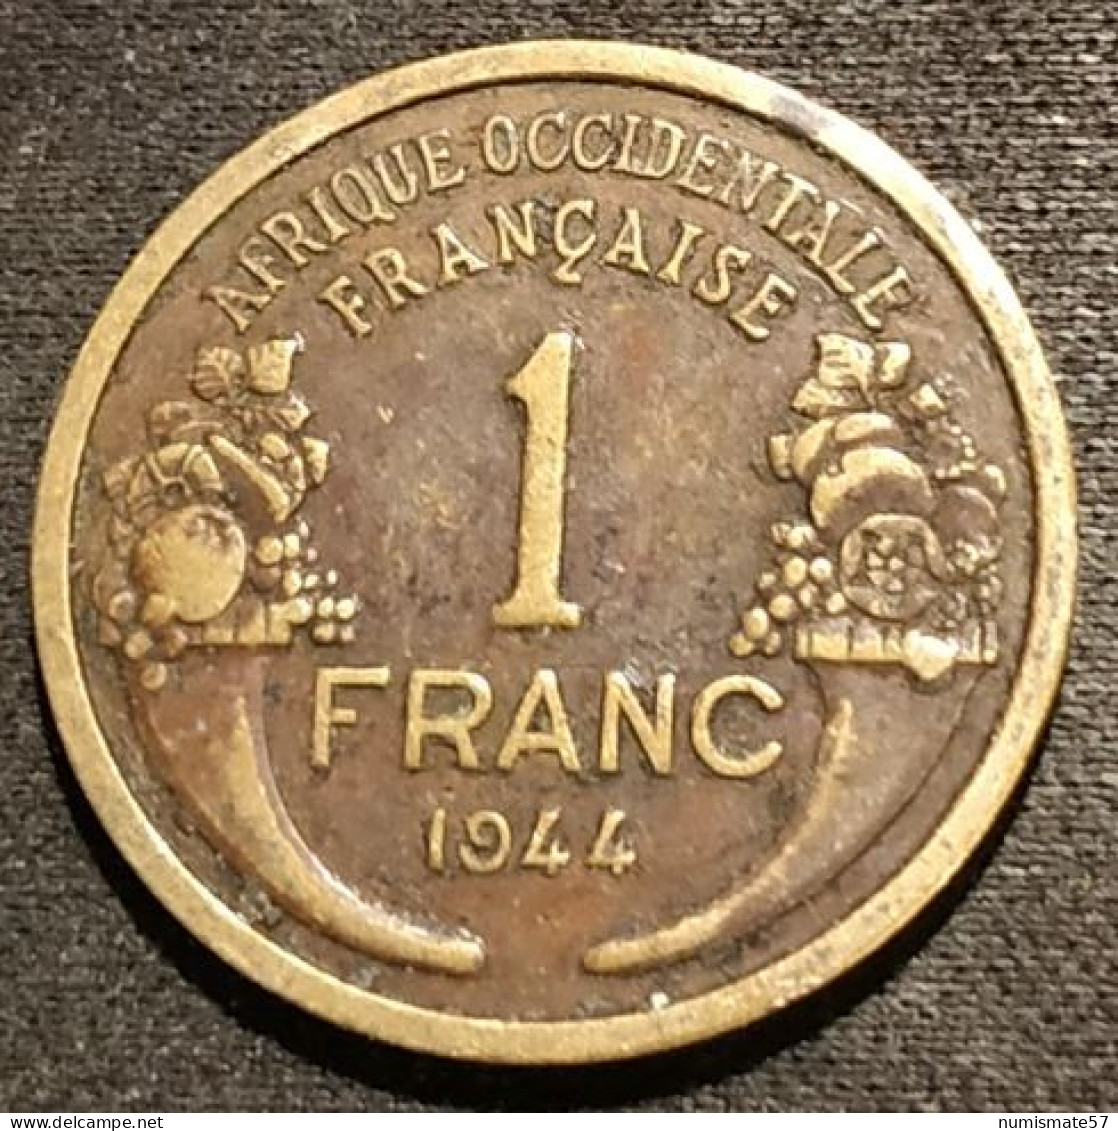 AFRIQUE OCCIDENTALE FRANÇAISE - 1 FRANC 1944 - Morlon - KM 2 - French West Africa